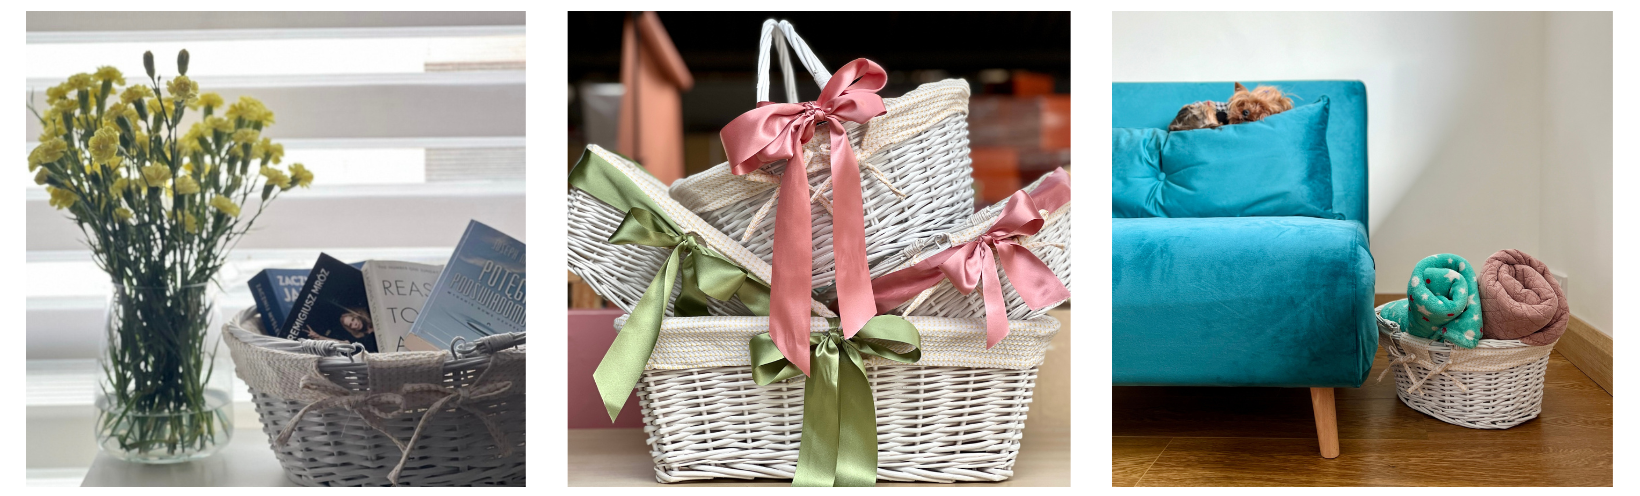 Repurposed Gift Baskets